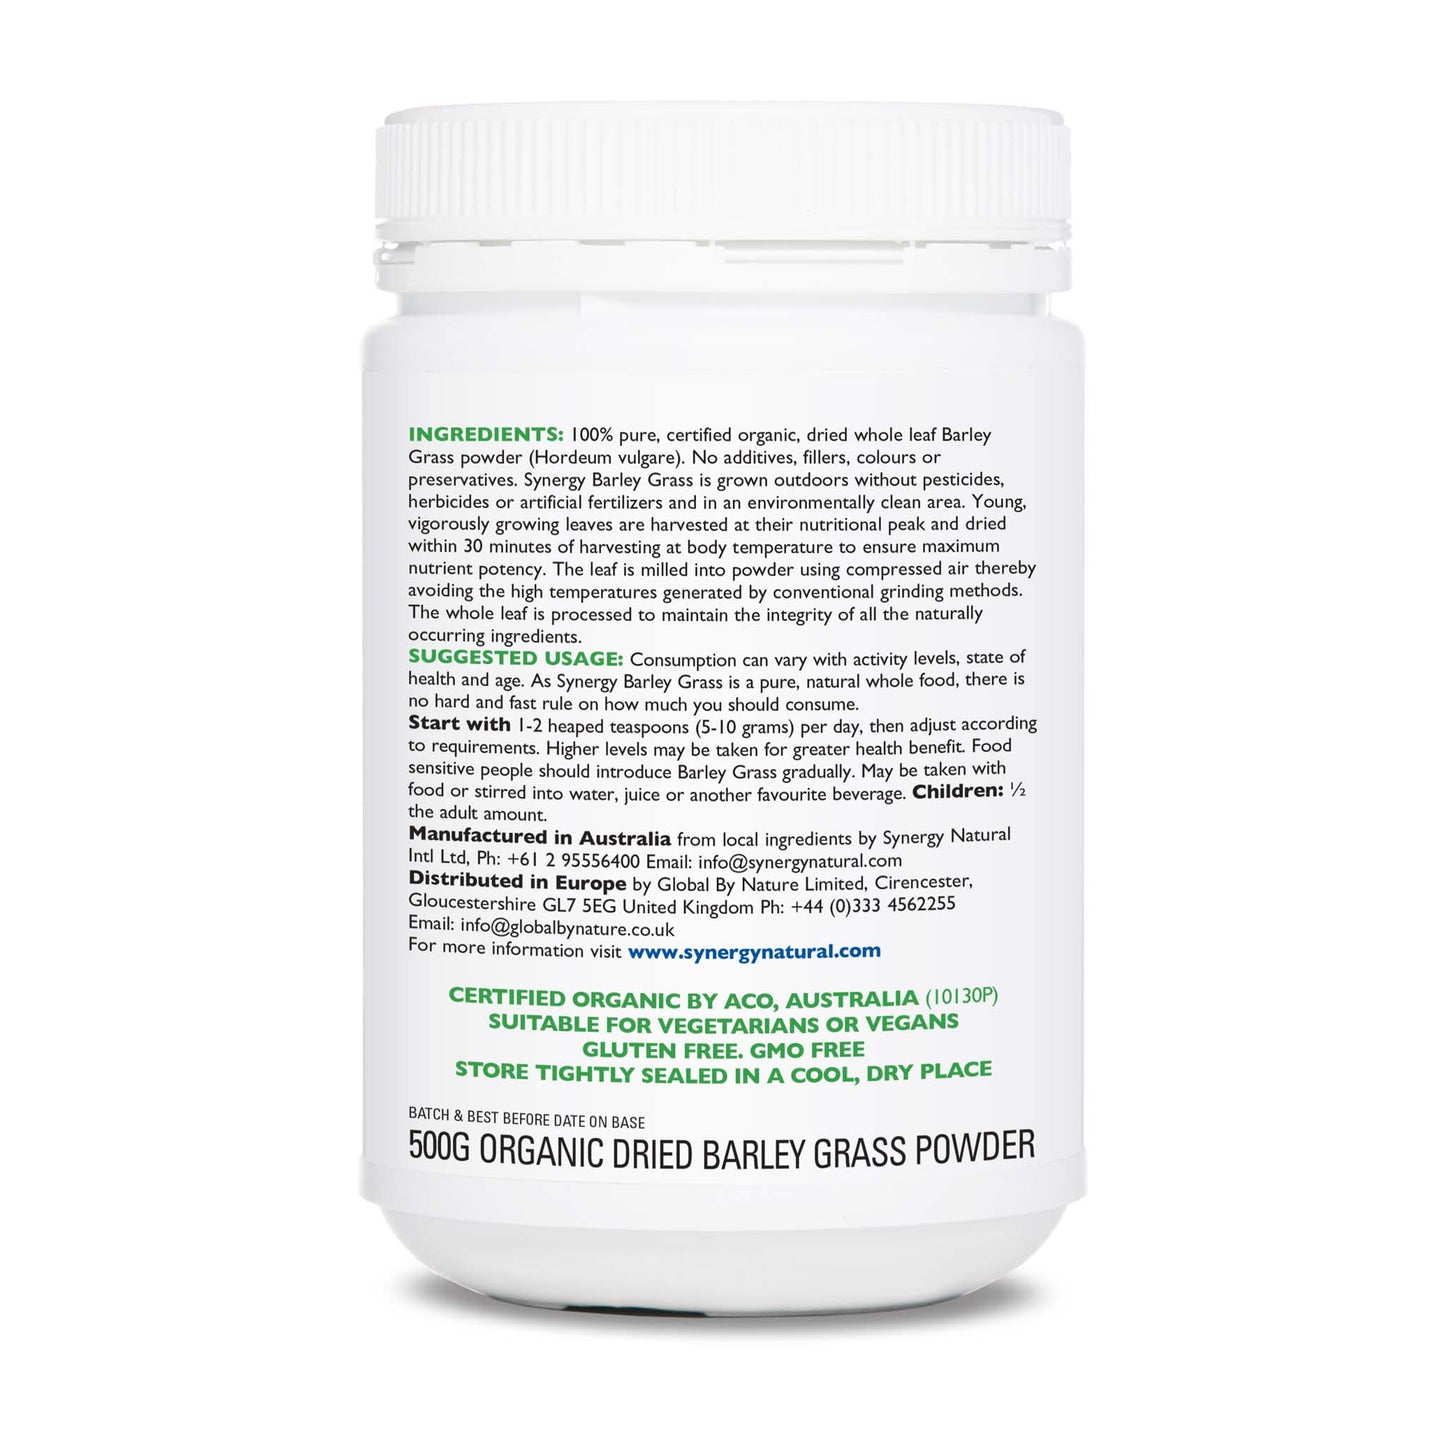 Synergy Natural Organic Barley Grass 500g Powder